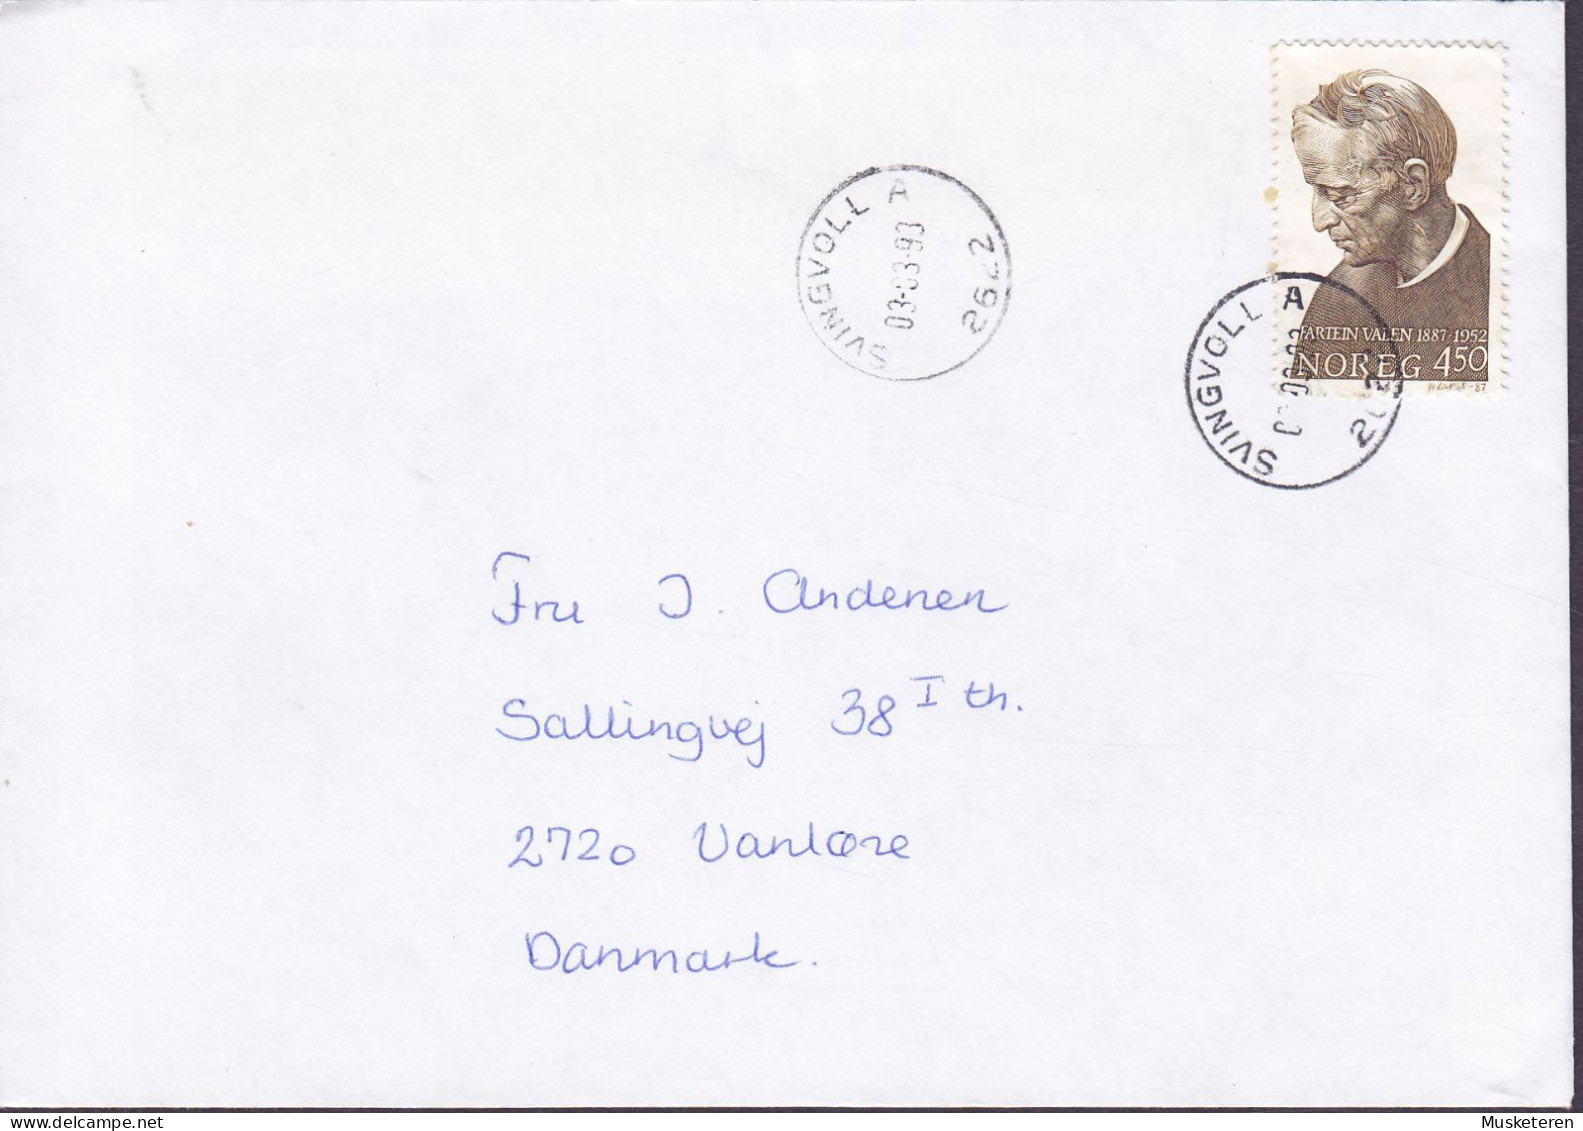 Norway SVINGVOLL 1993 Cover Brief Lettre VANLØSE Denmark 4.50 Kr Fartein Valen Stamp - Covers & Documents